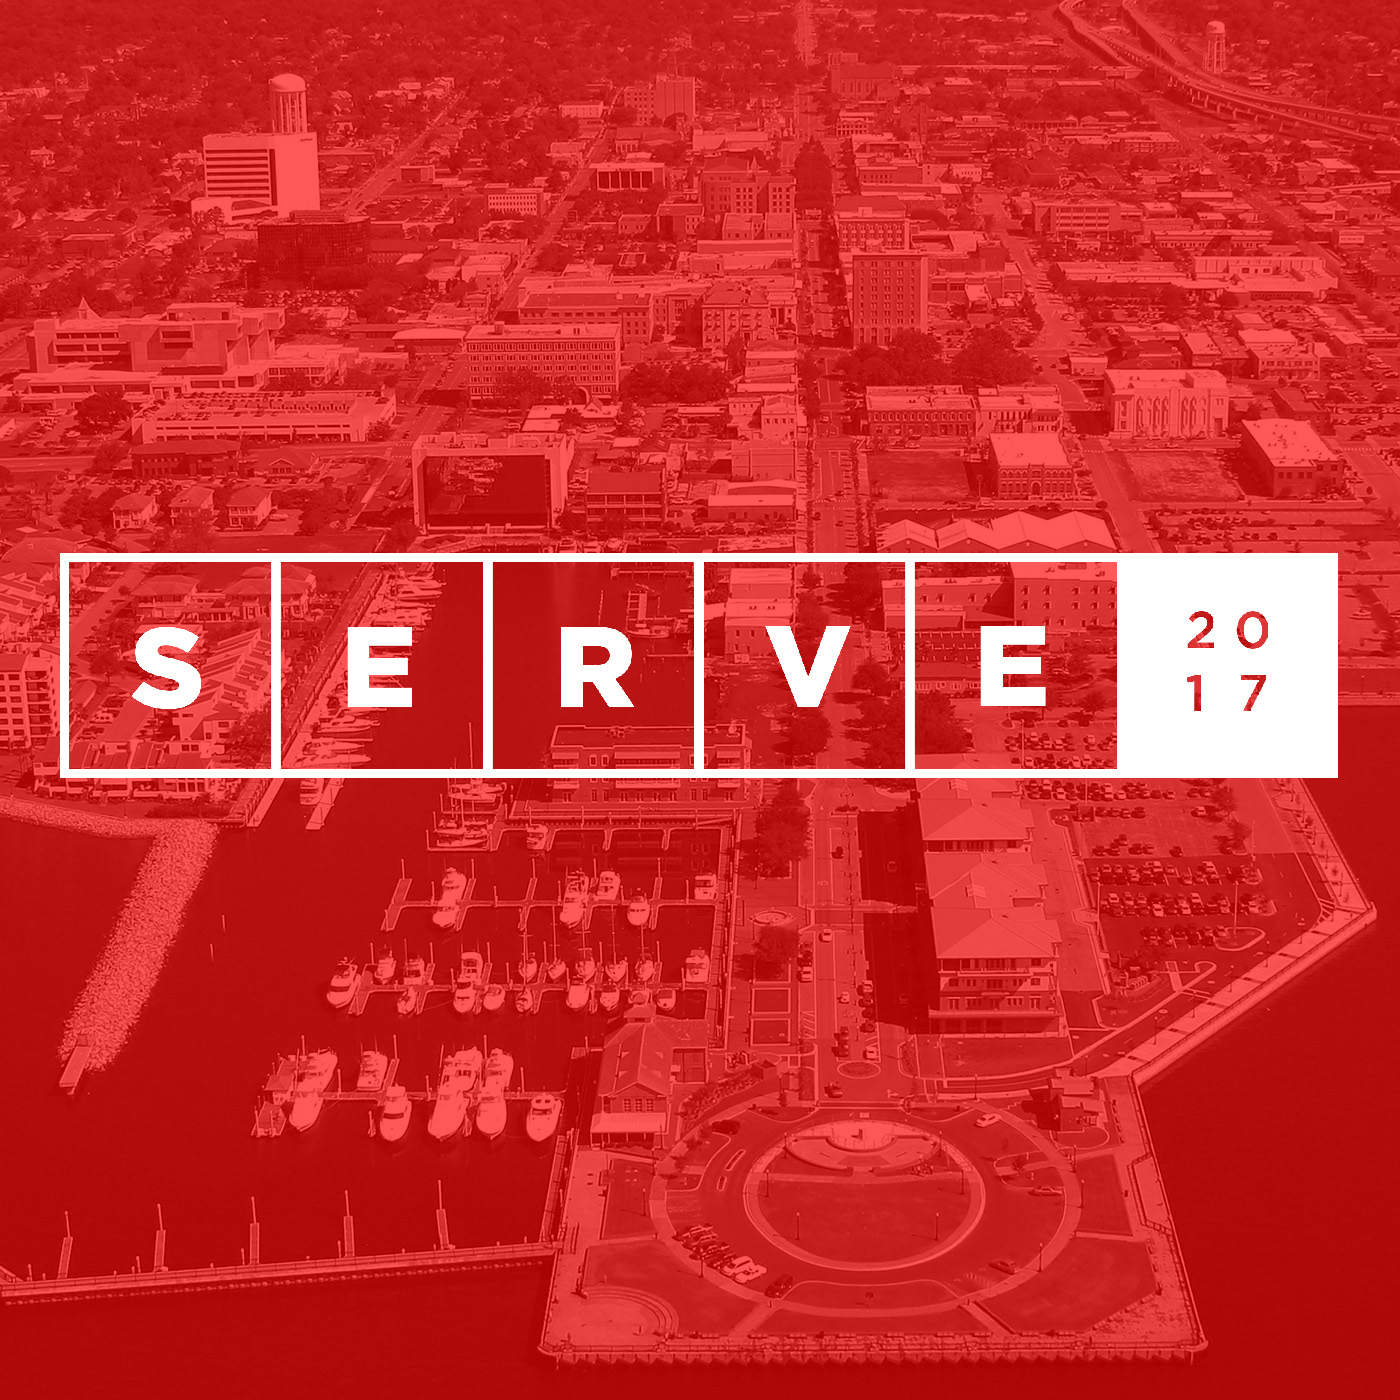 Serve - Part 3 - Serving Through Seasons